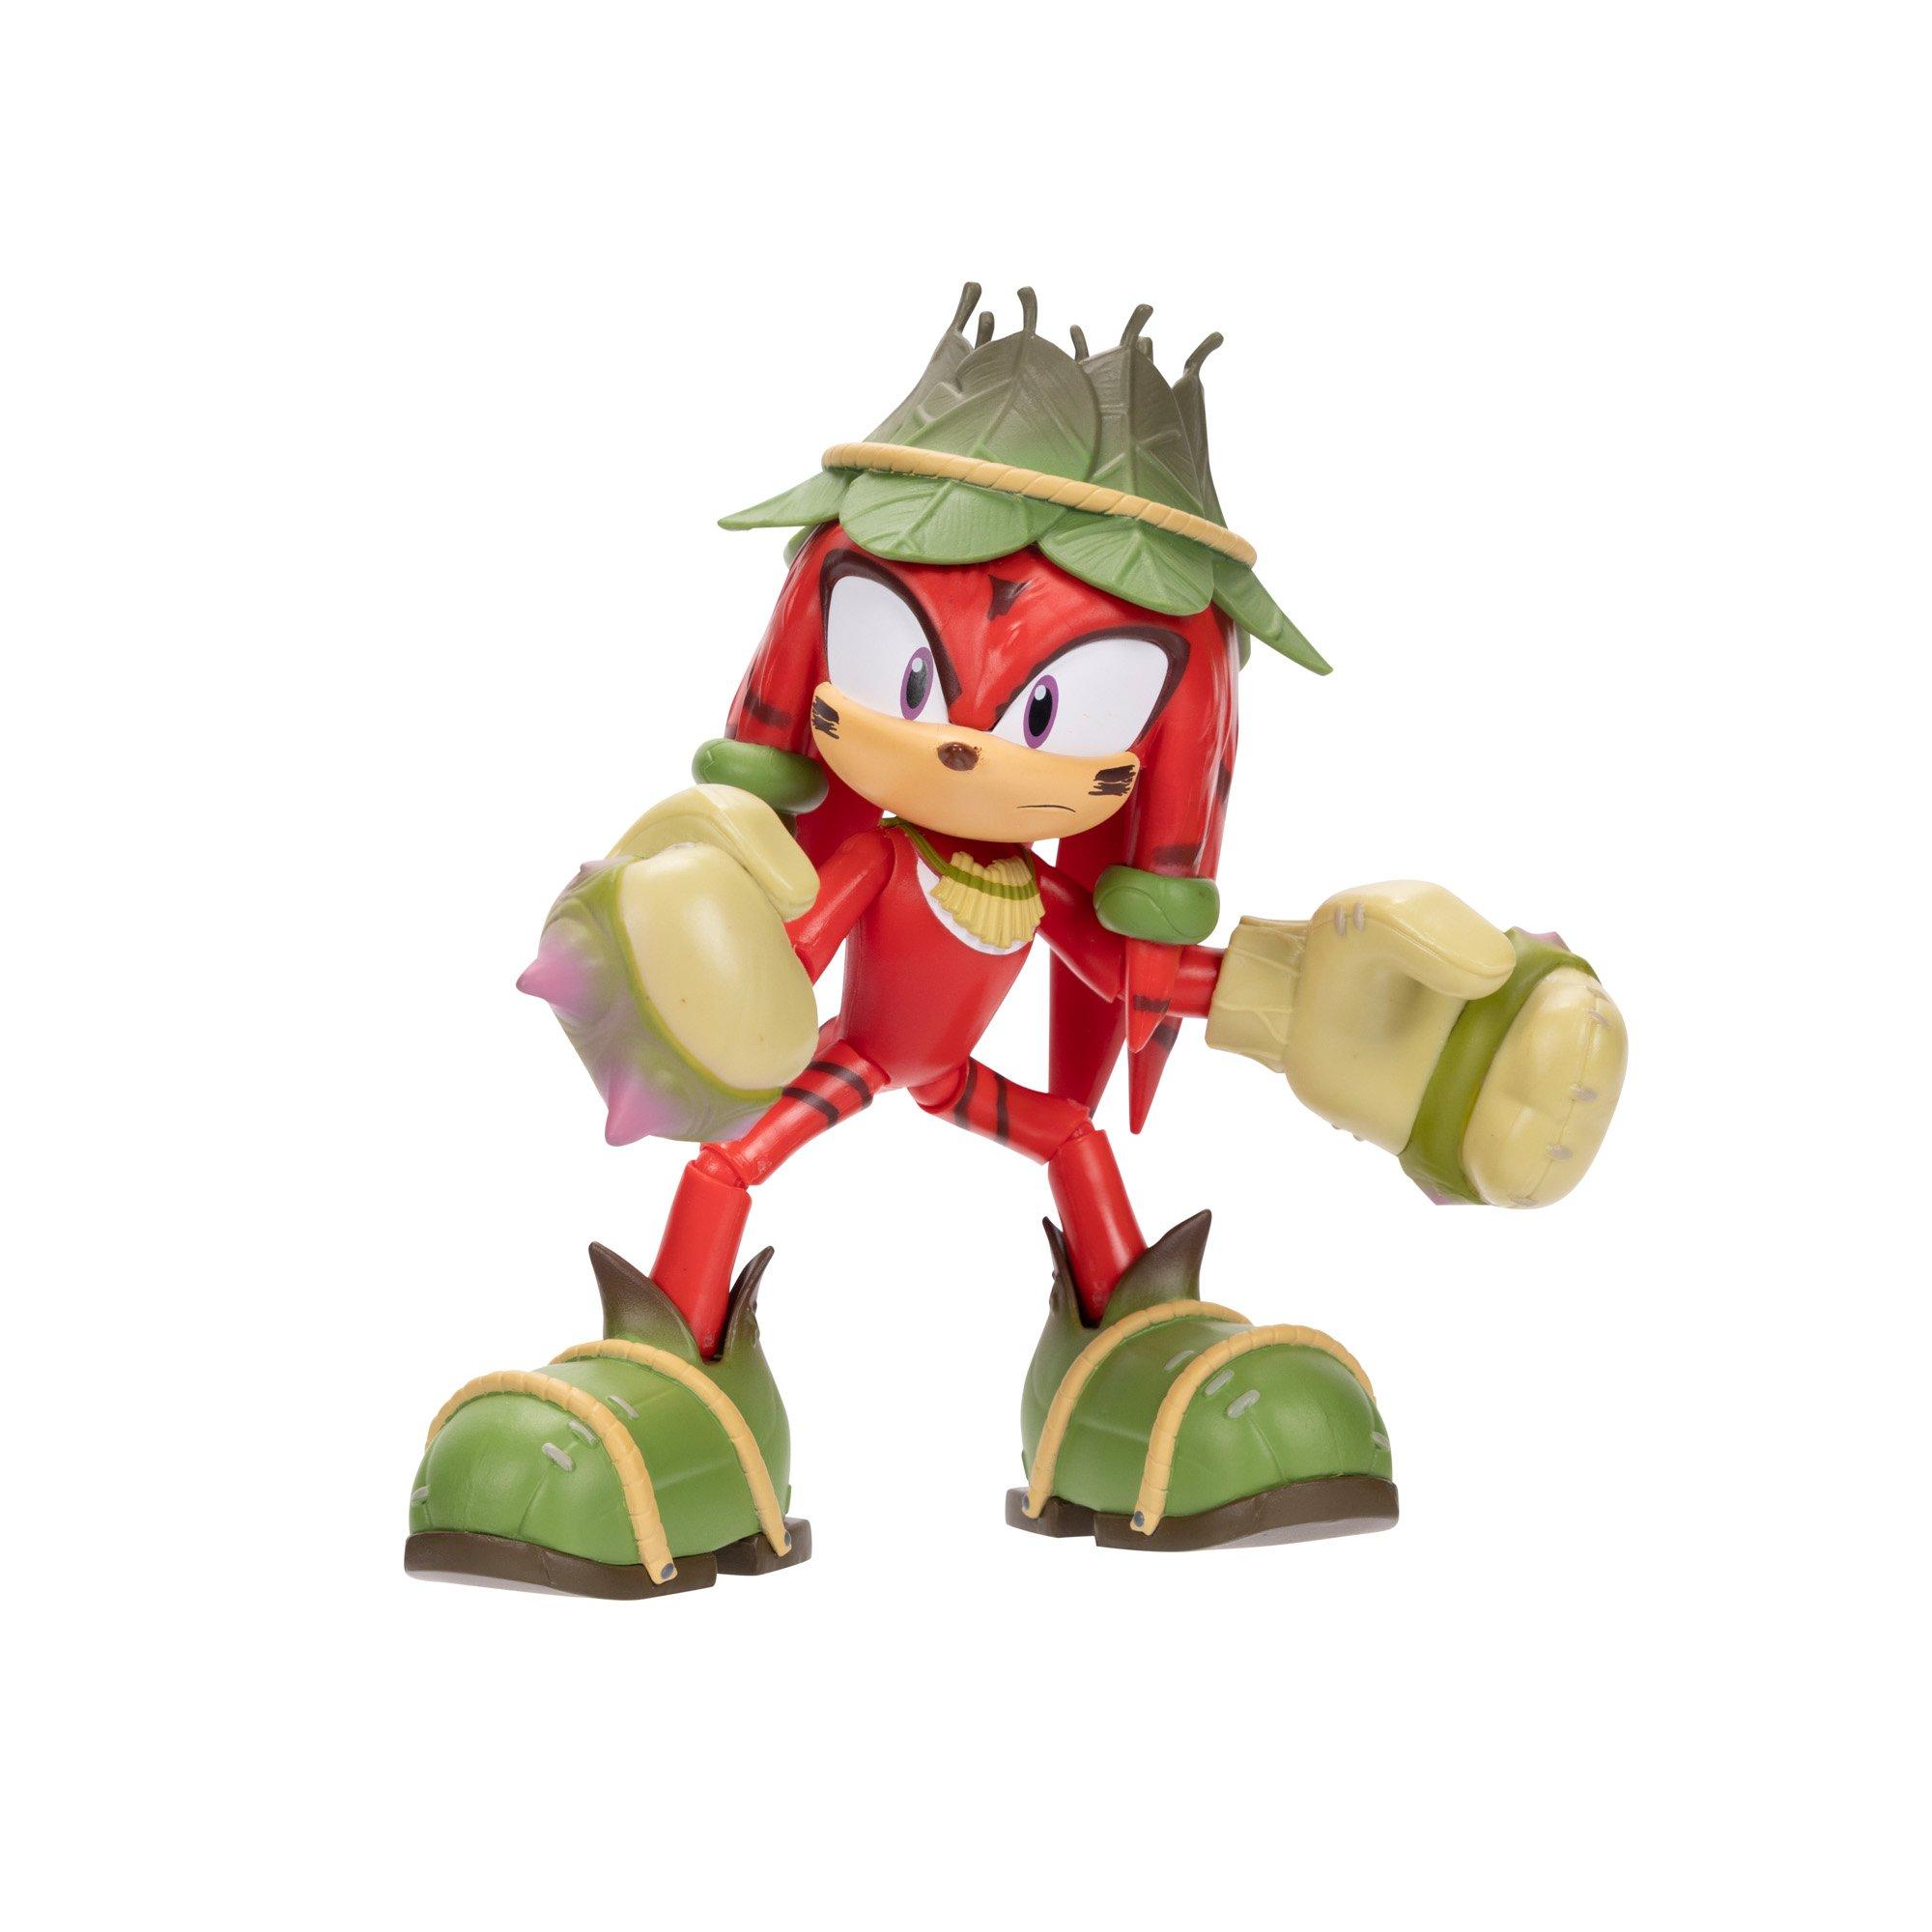 Sonic Prime Shadow 5 Action Figure